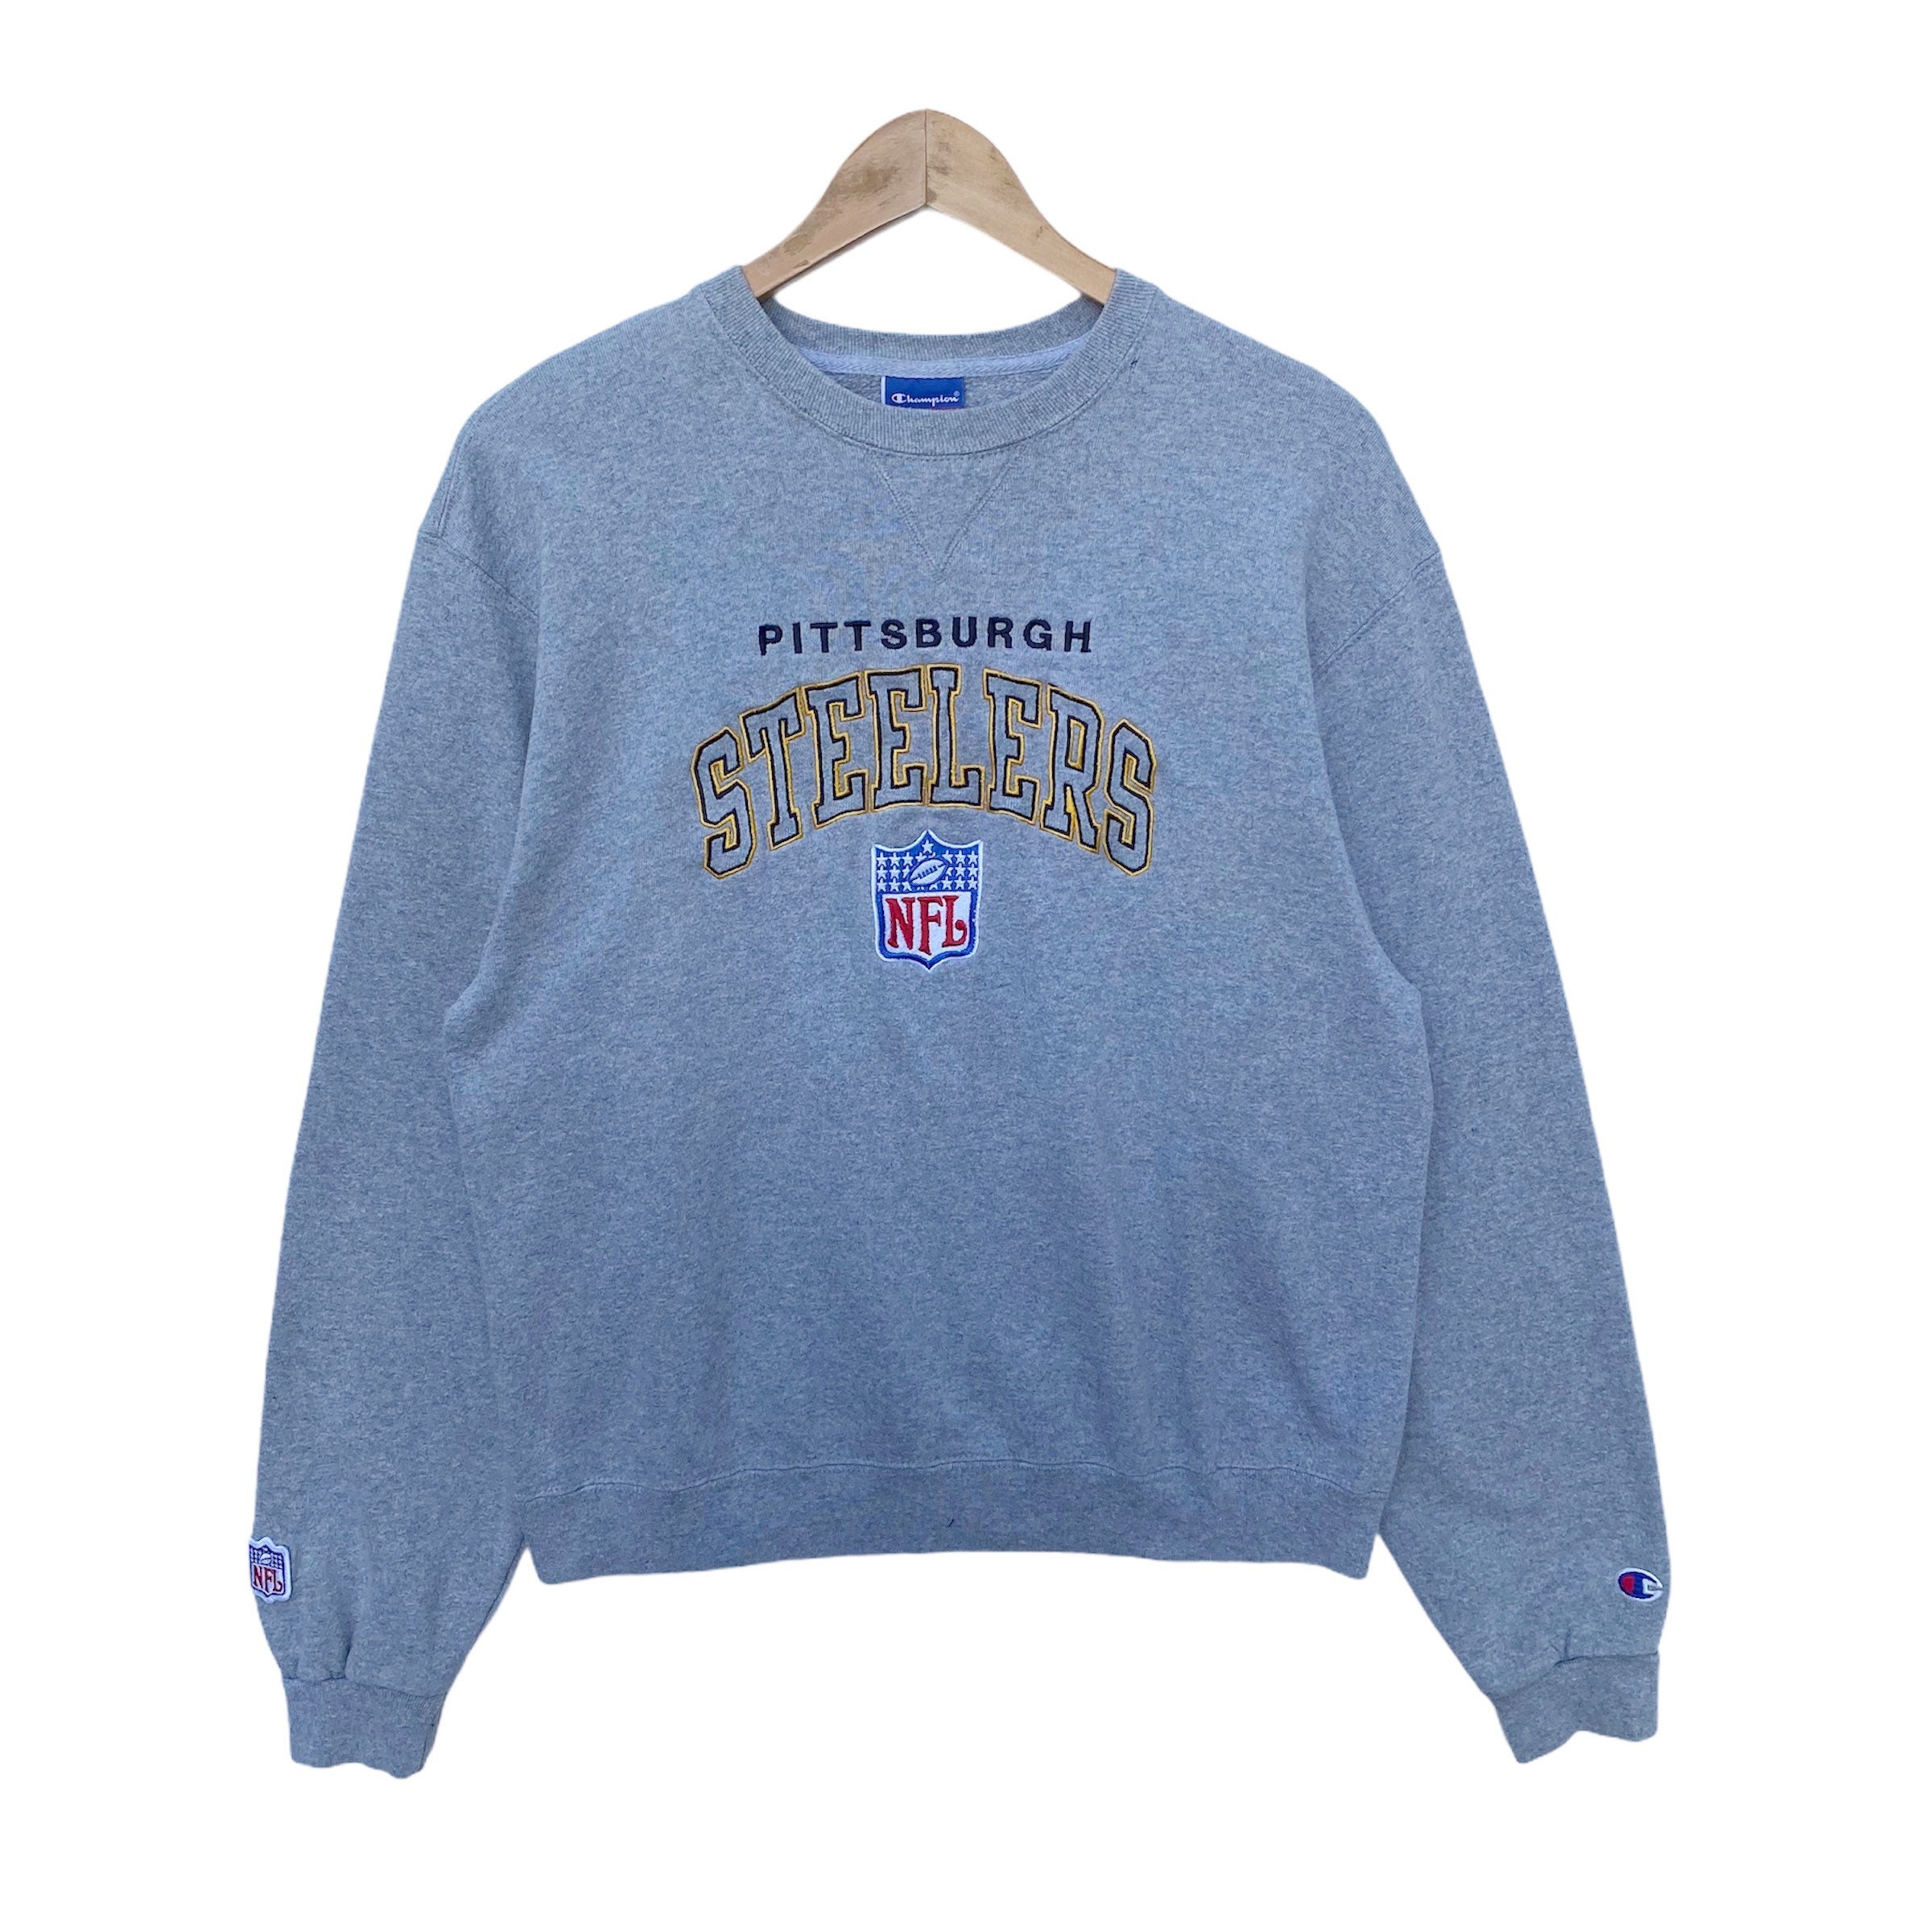 Vintage PITTSBURGH STEELERS Nfl Sweatshirt Sweater Crew Neck | Etsy